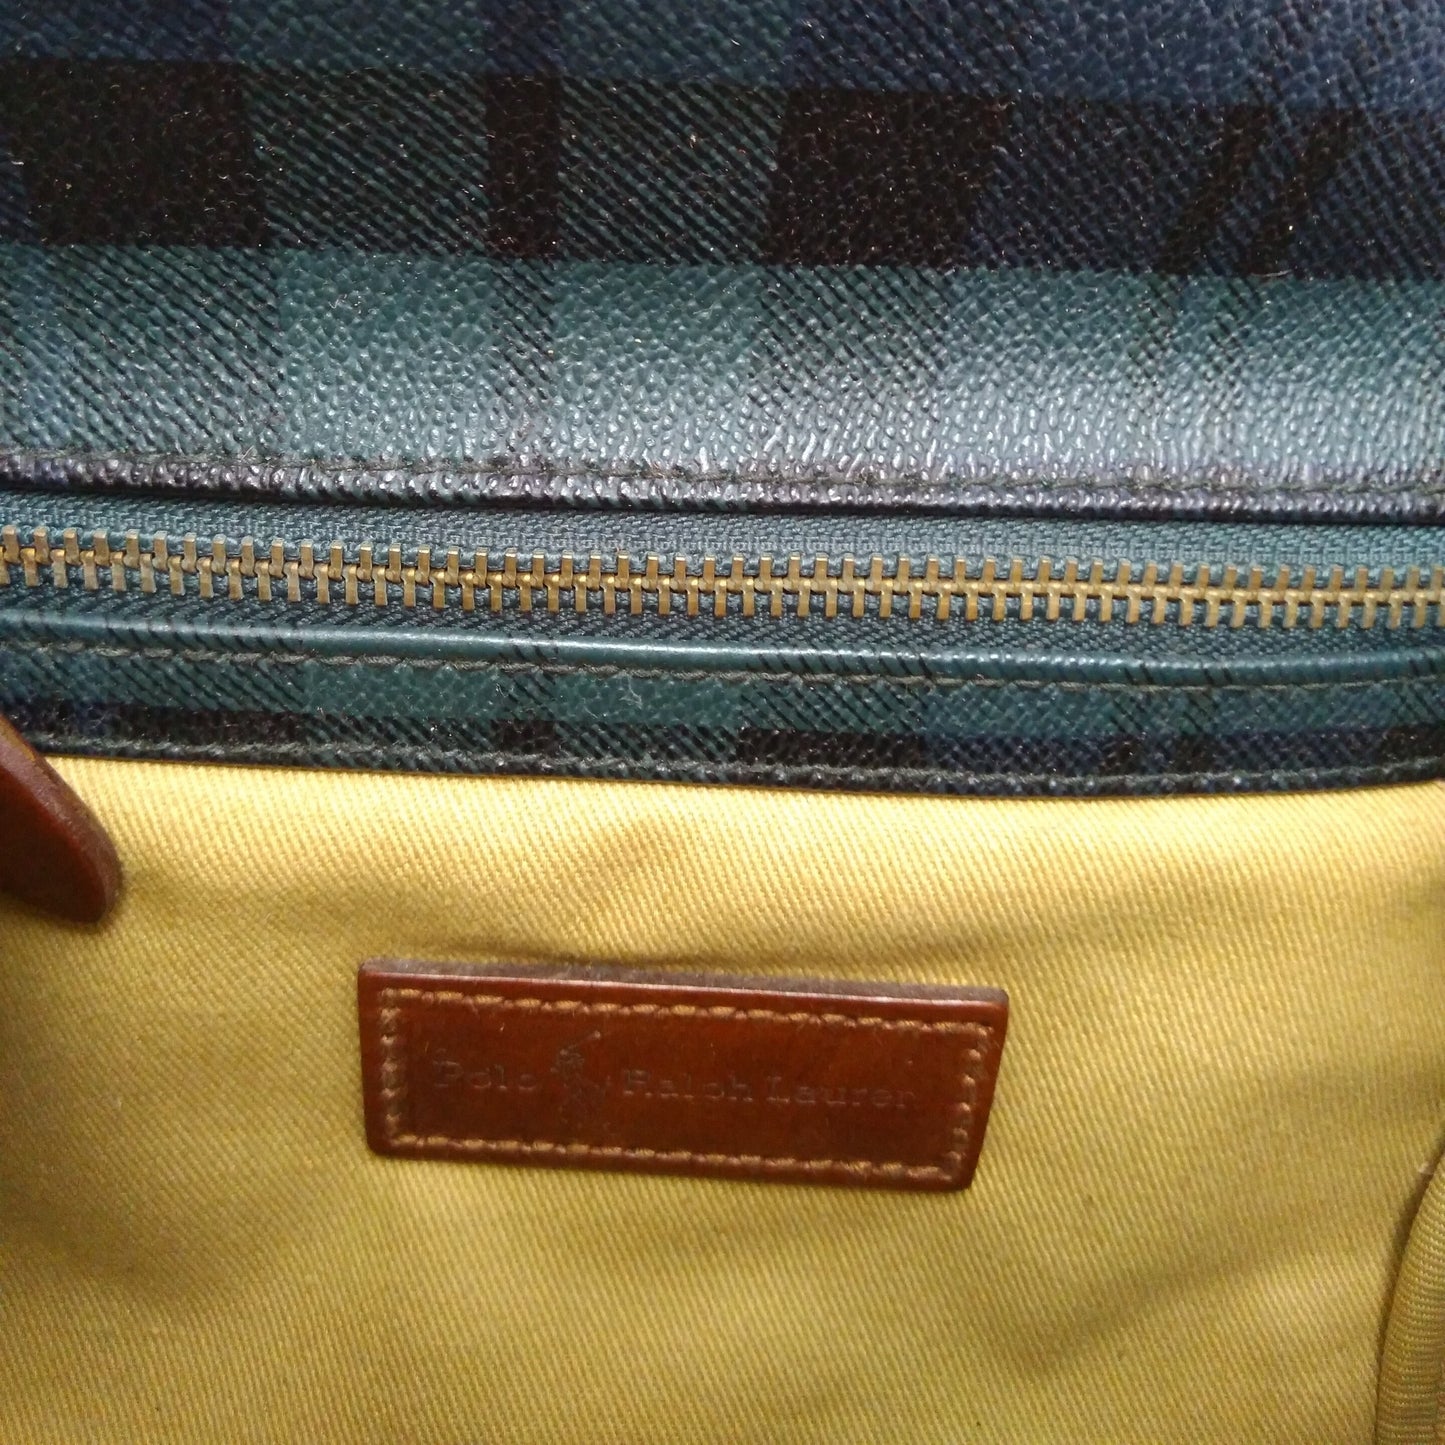 Vintage Polo Ralph Lauren unisex Crossbody Bag